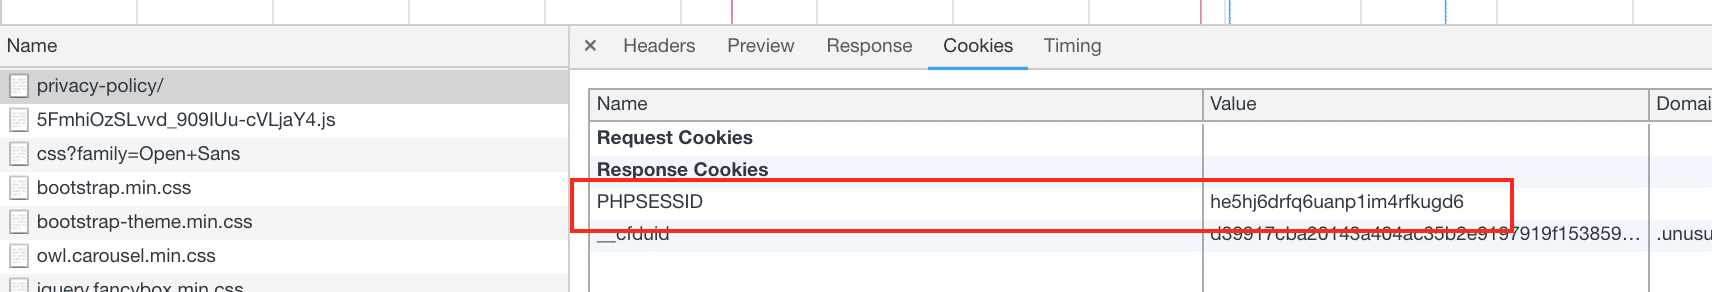 Cookies HTTP PHPSESSID